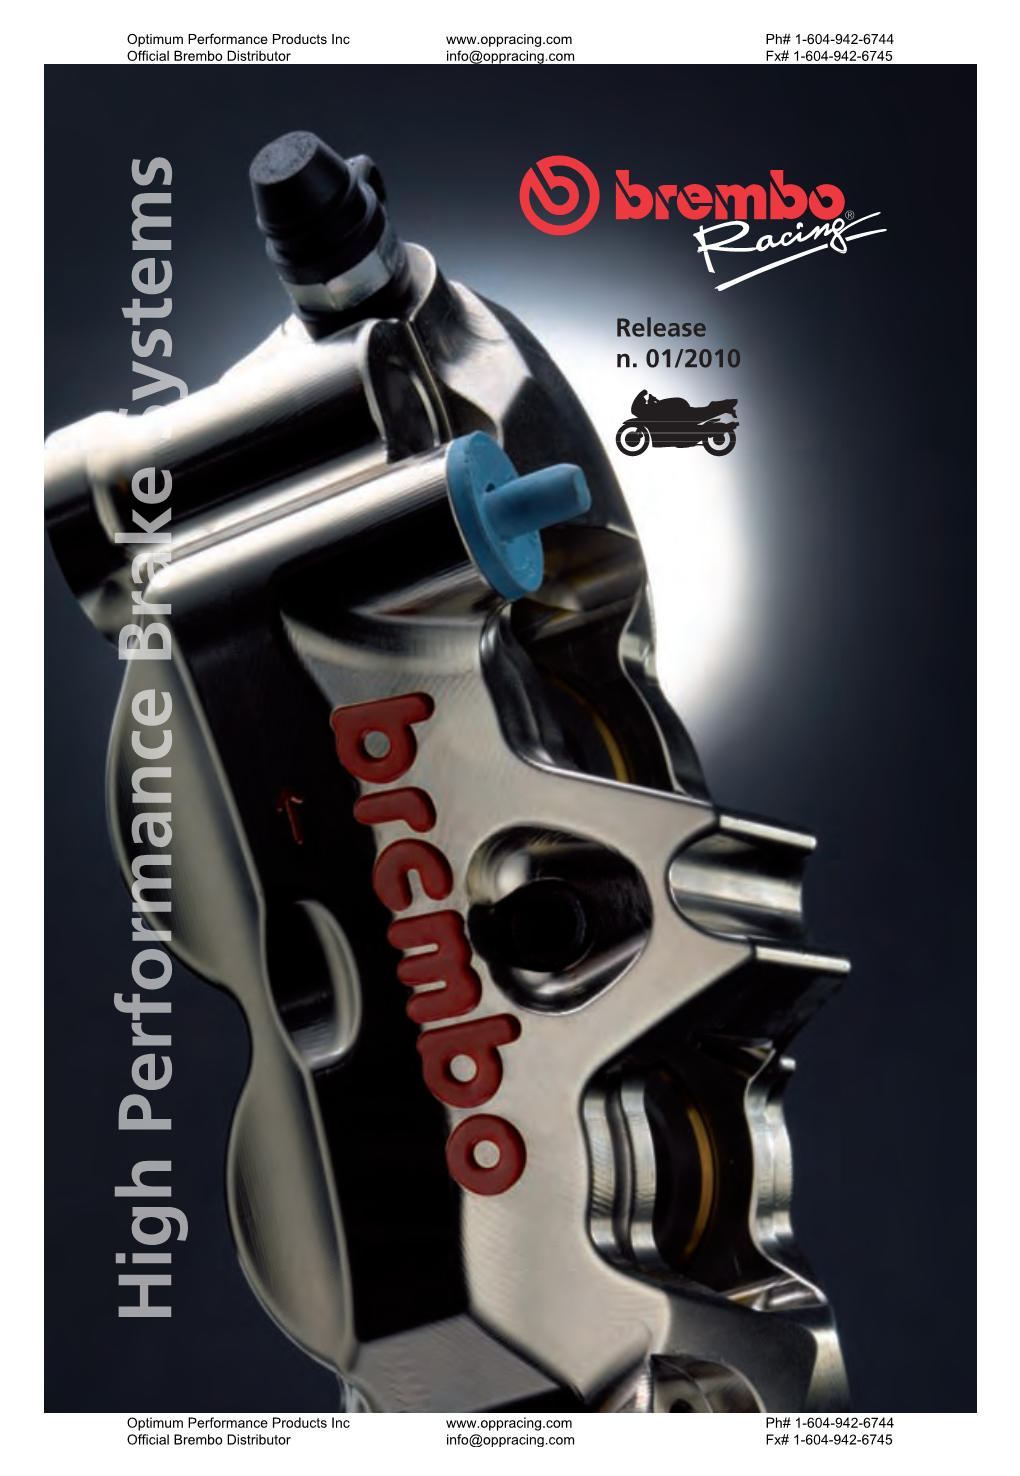 Brembo 2010 Motorcycle Catalog